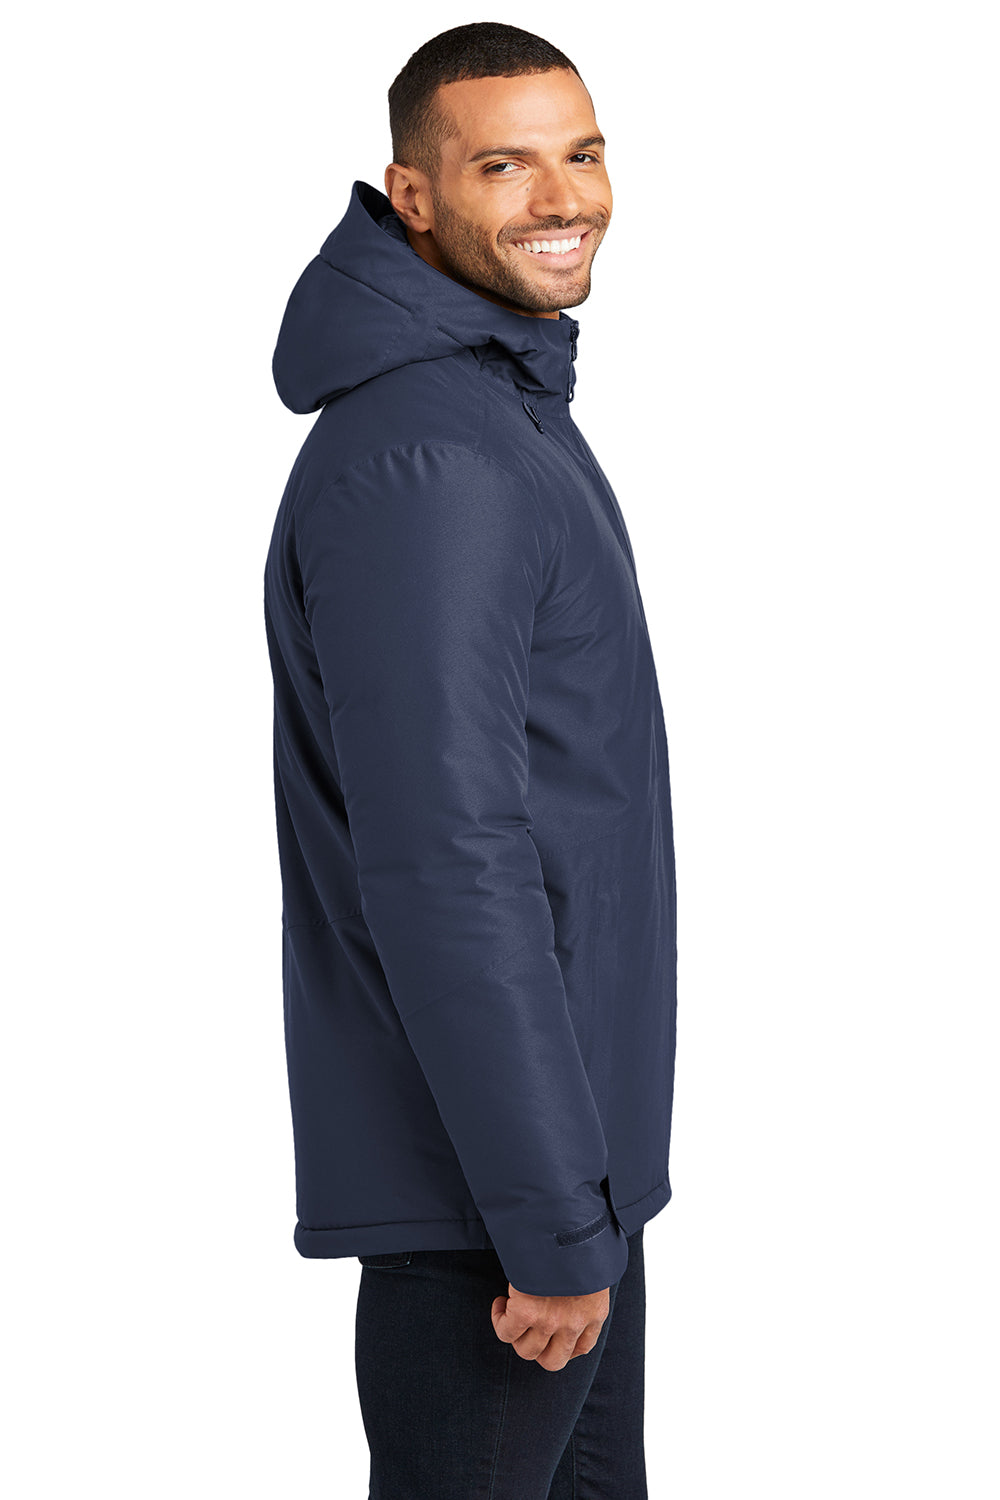 Port Authority J362 Mens Venture Waterproof Insulated Full Zip Hooded Jacket Dress Navy Blue Side